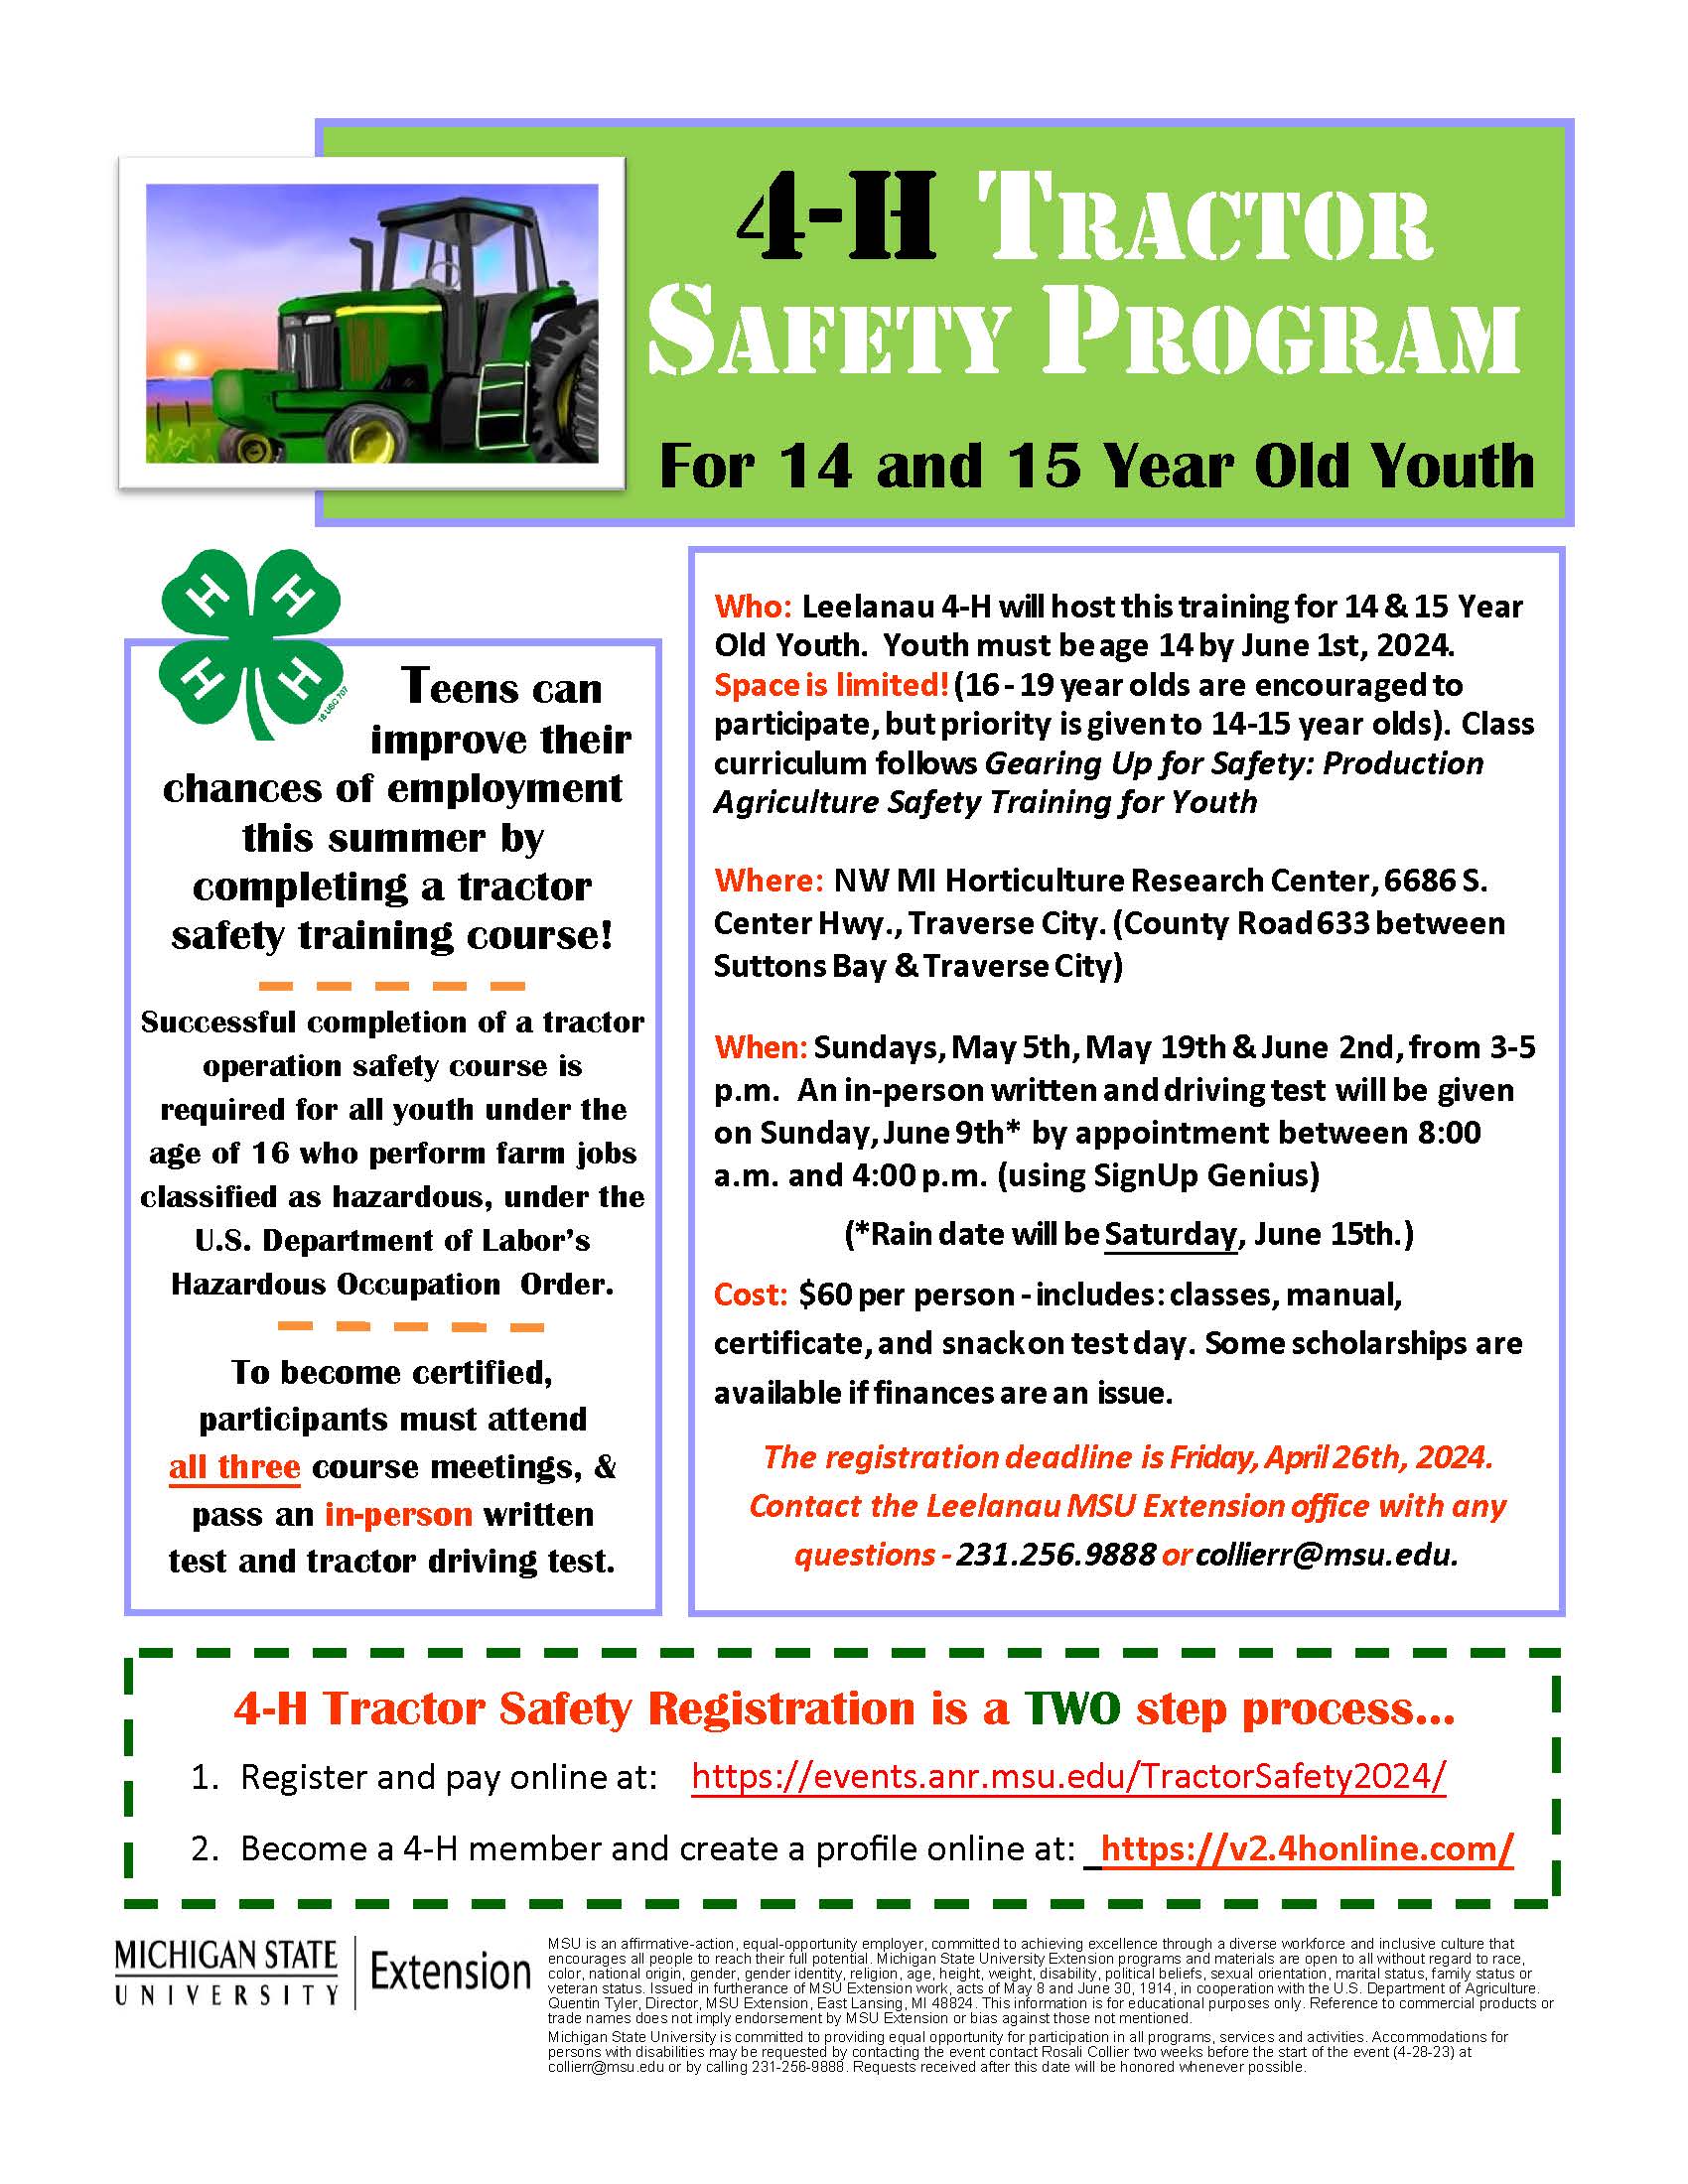 Tractor Safety Program Flyer 2024.jpg